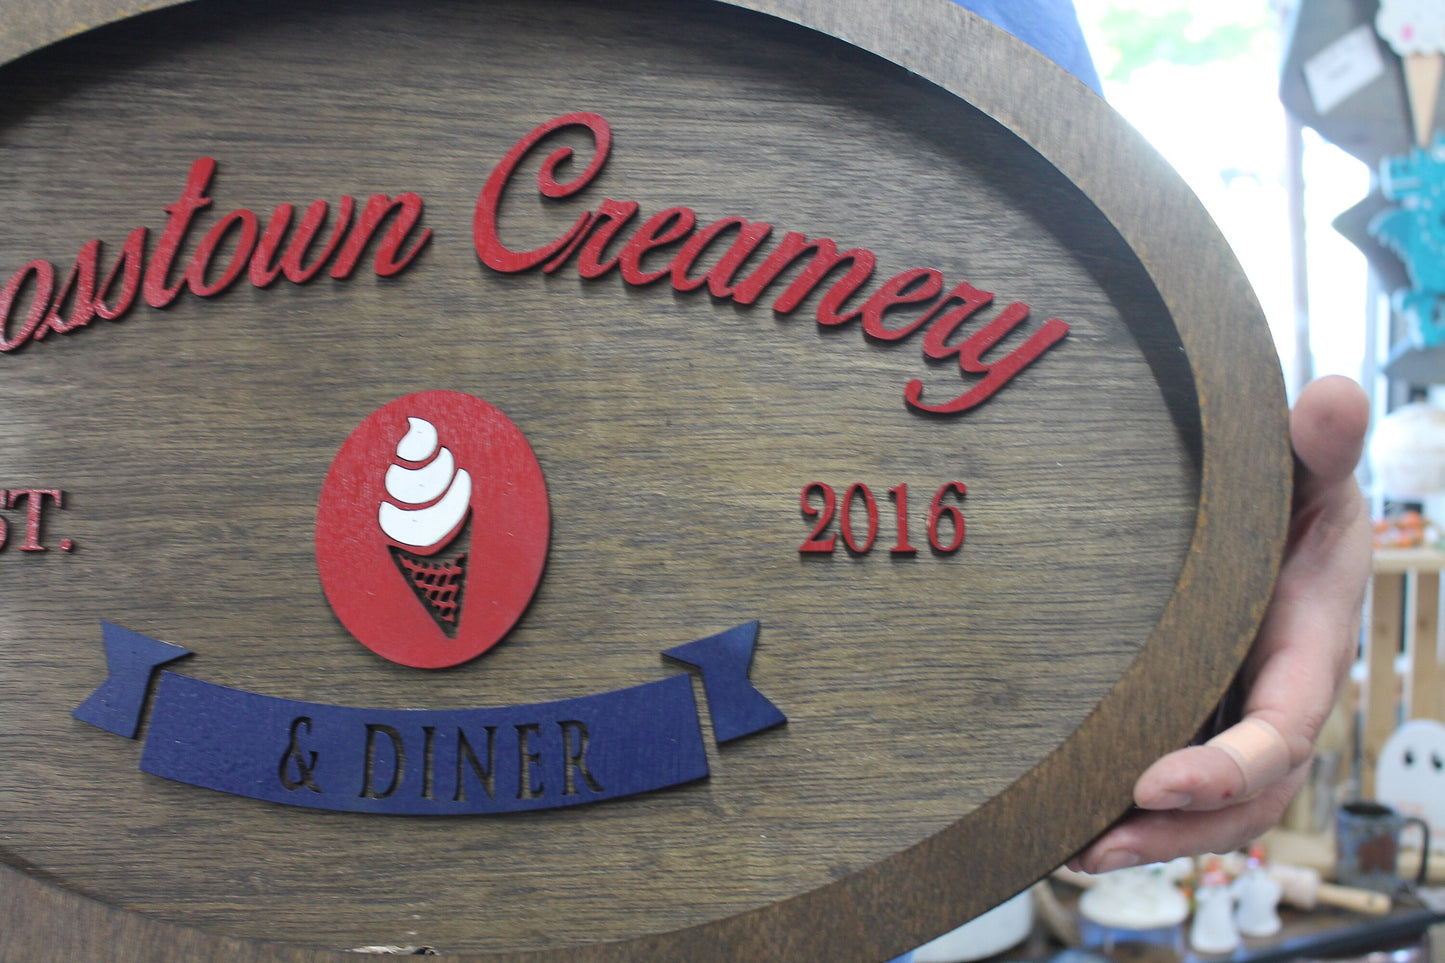 Custom Creamery Eatery Restaurant Ice Cream Wooden Led Elevated Text Raised Words Oval Light Up Indoor Remote Handmade Kitchen Logo